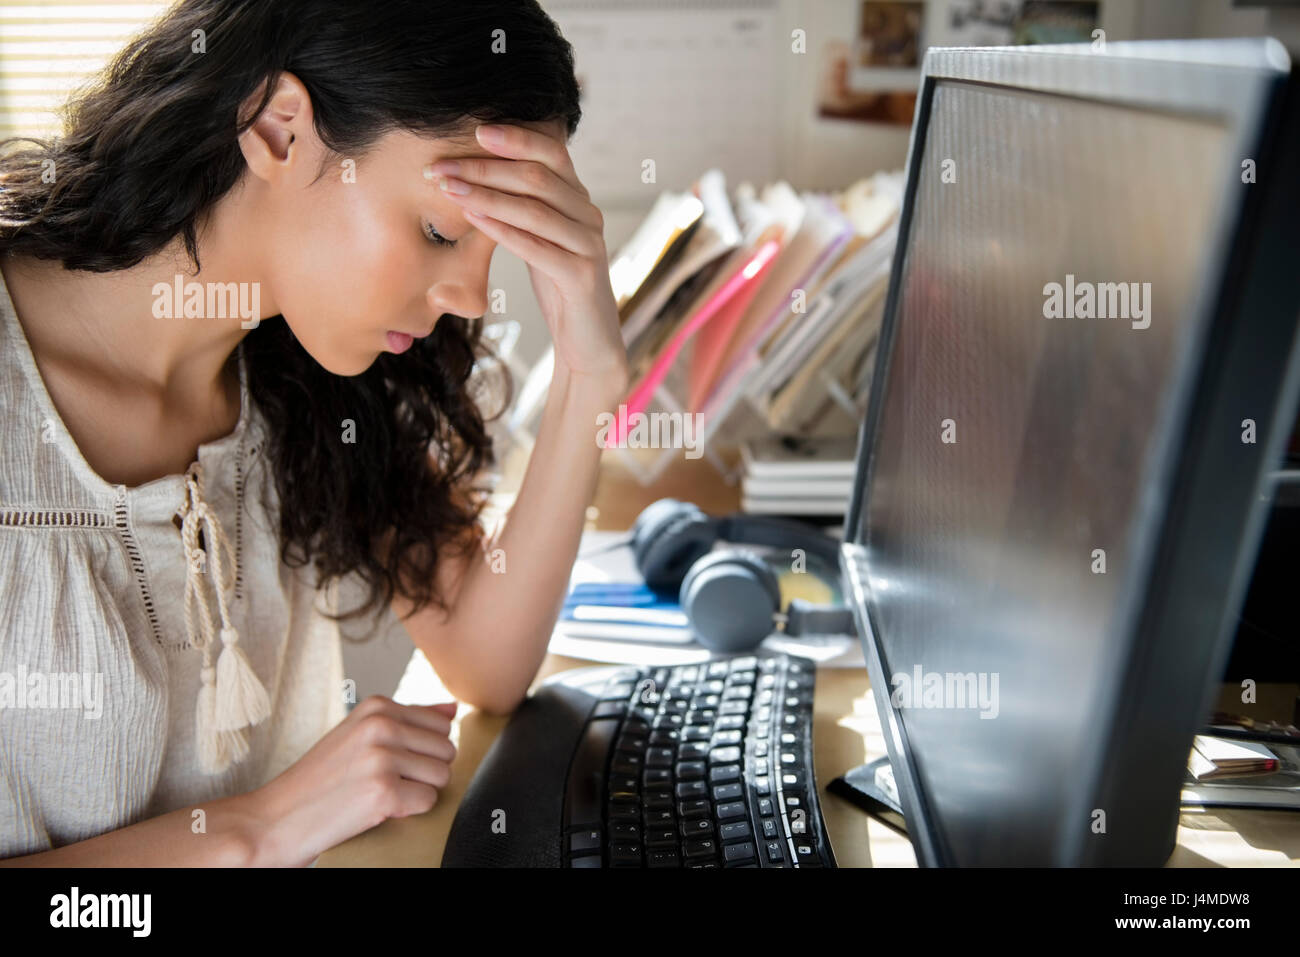 Frustrated Hispanic woman using computer Stock Photo